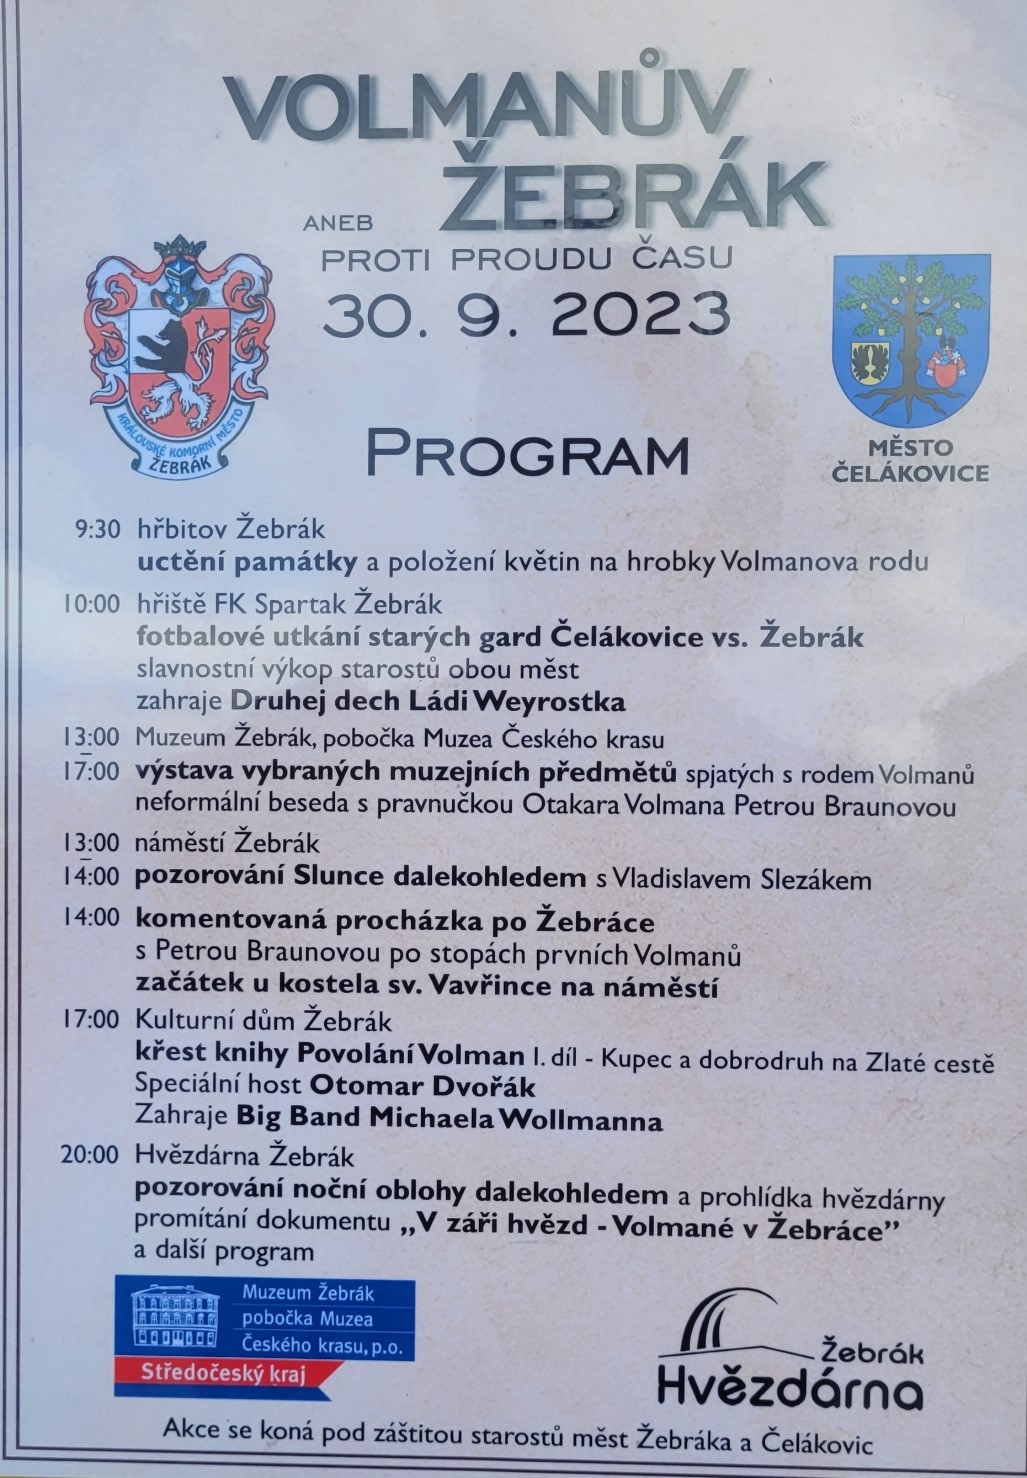 Zebrak Volman program 30.9.2023